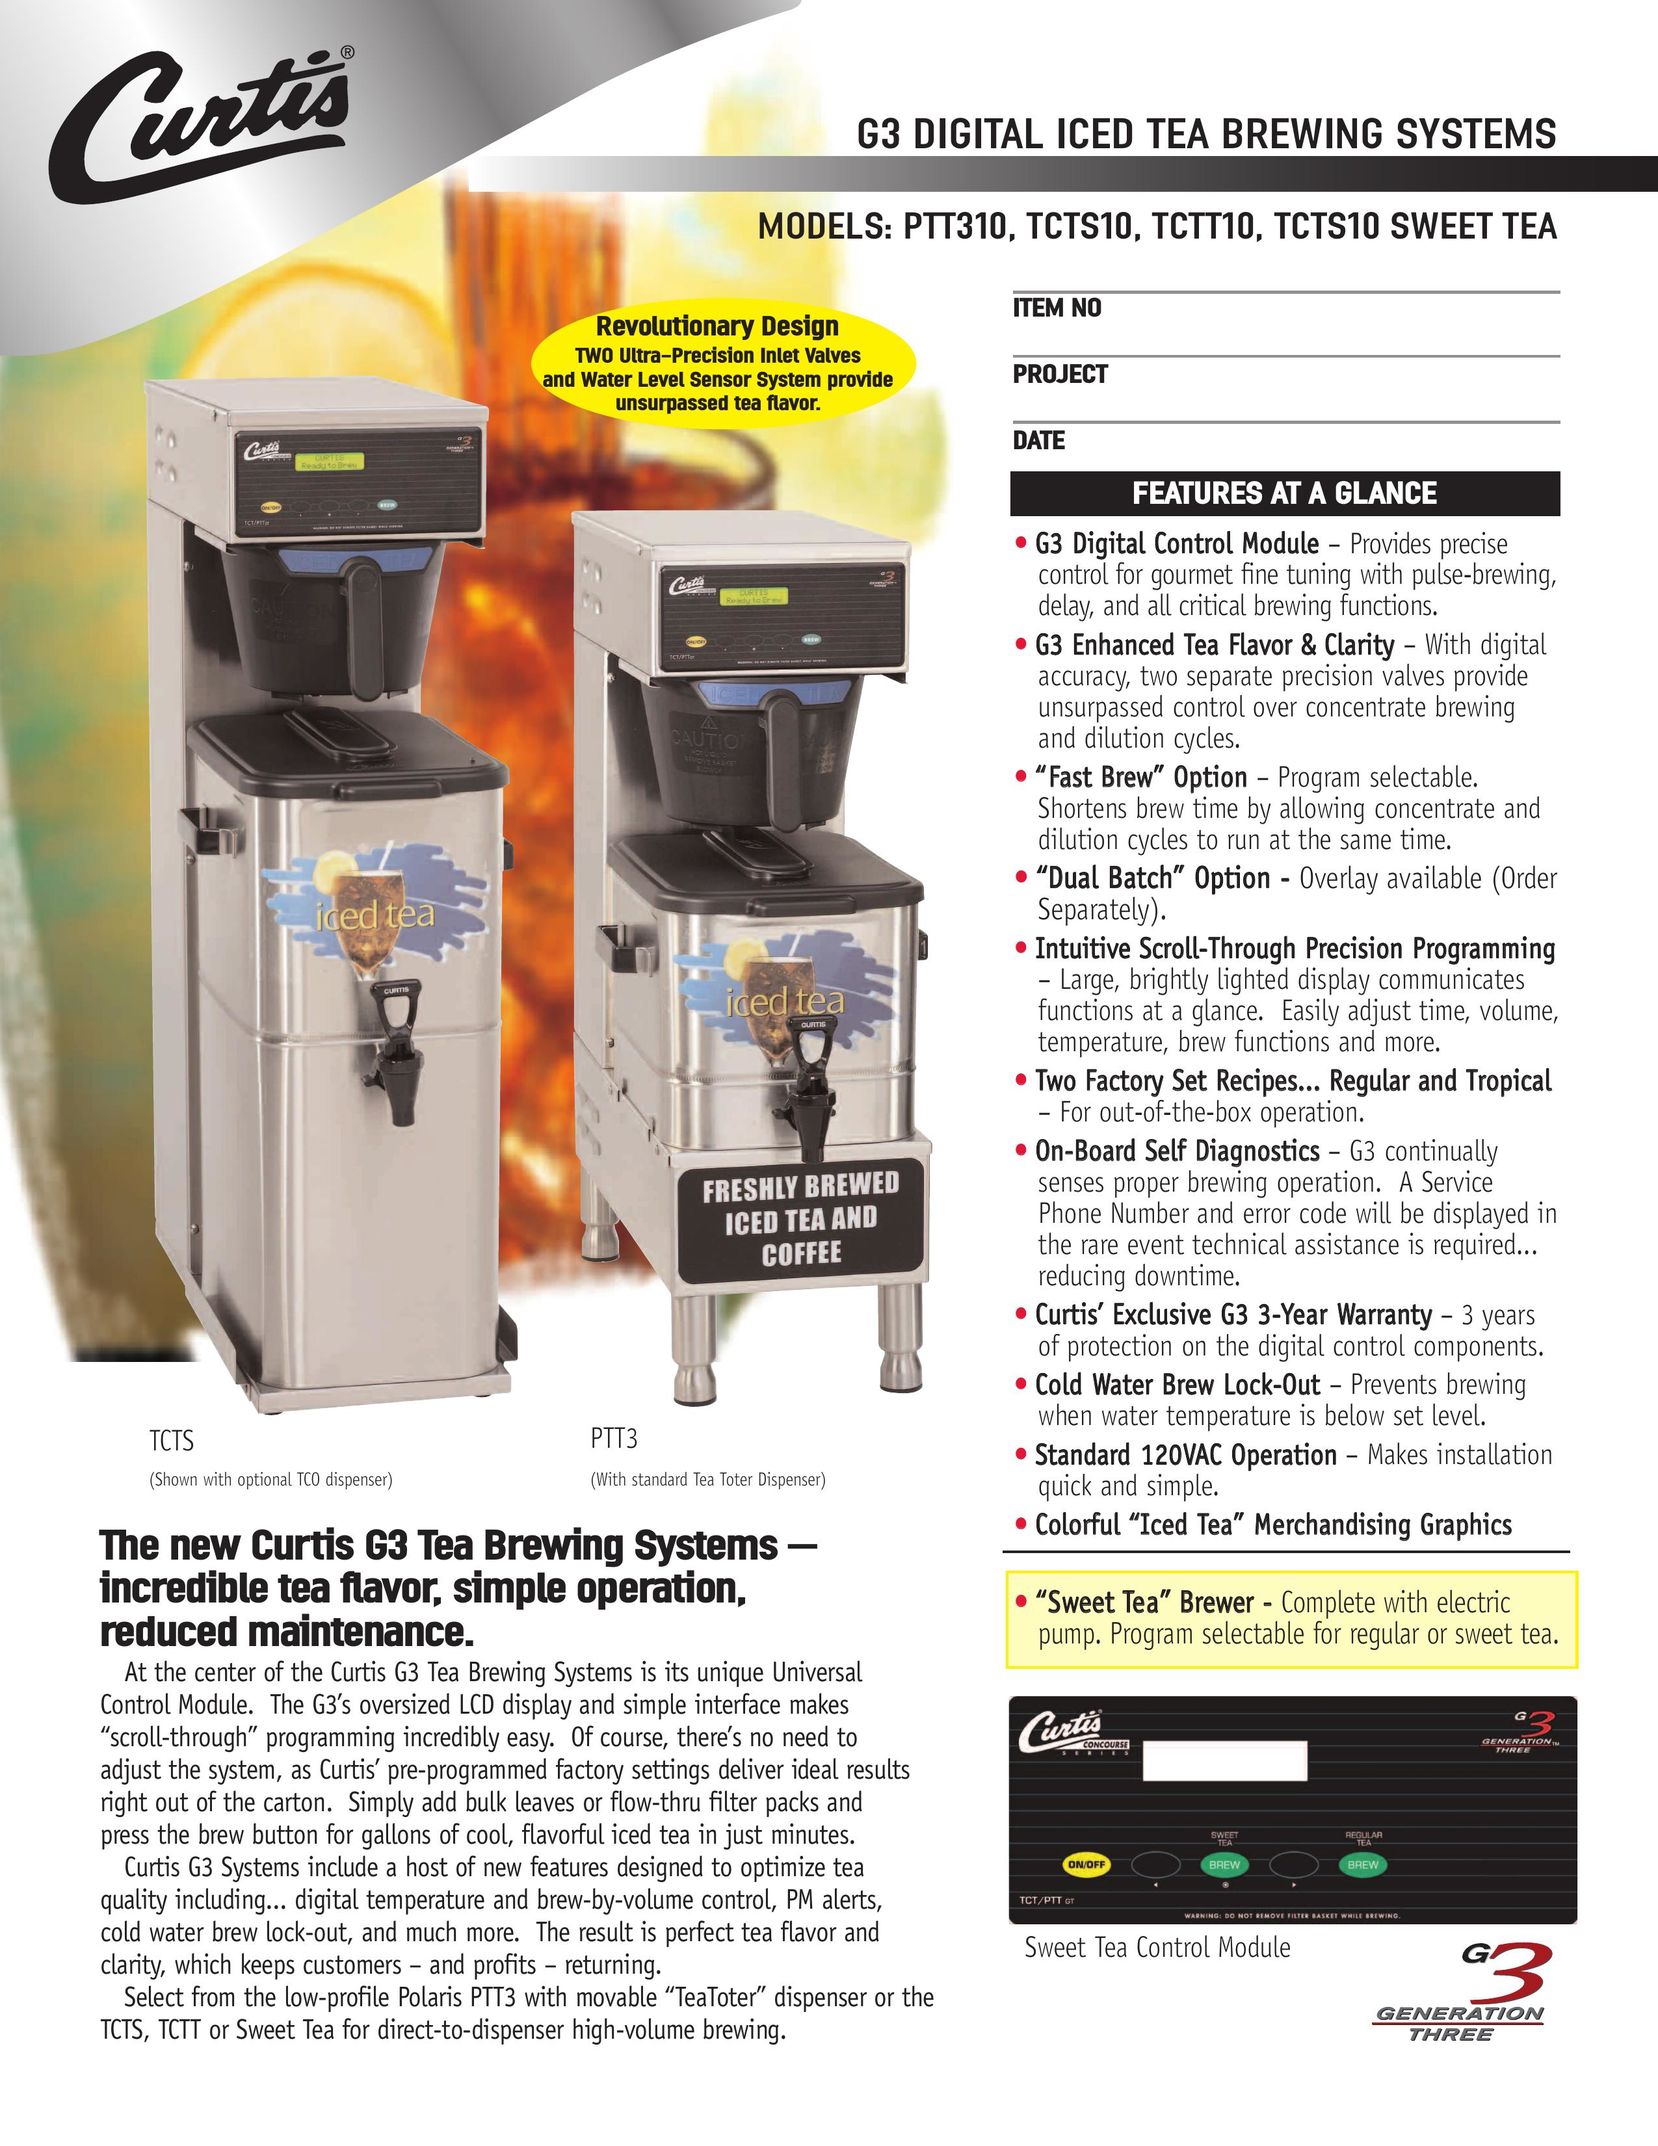 Curtis TCTS10 Ice Tea Maker User Manual